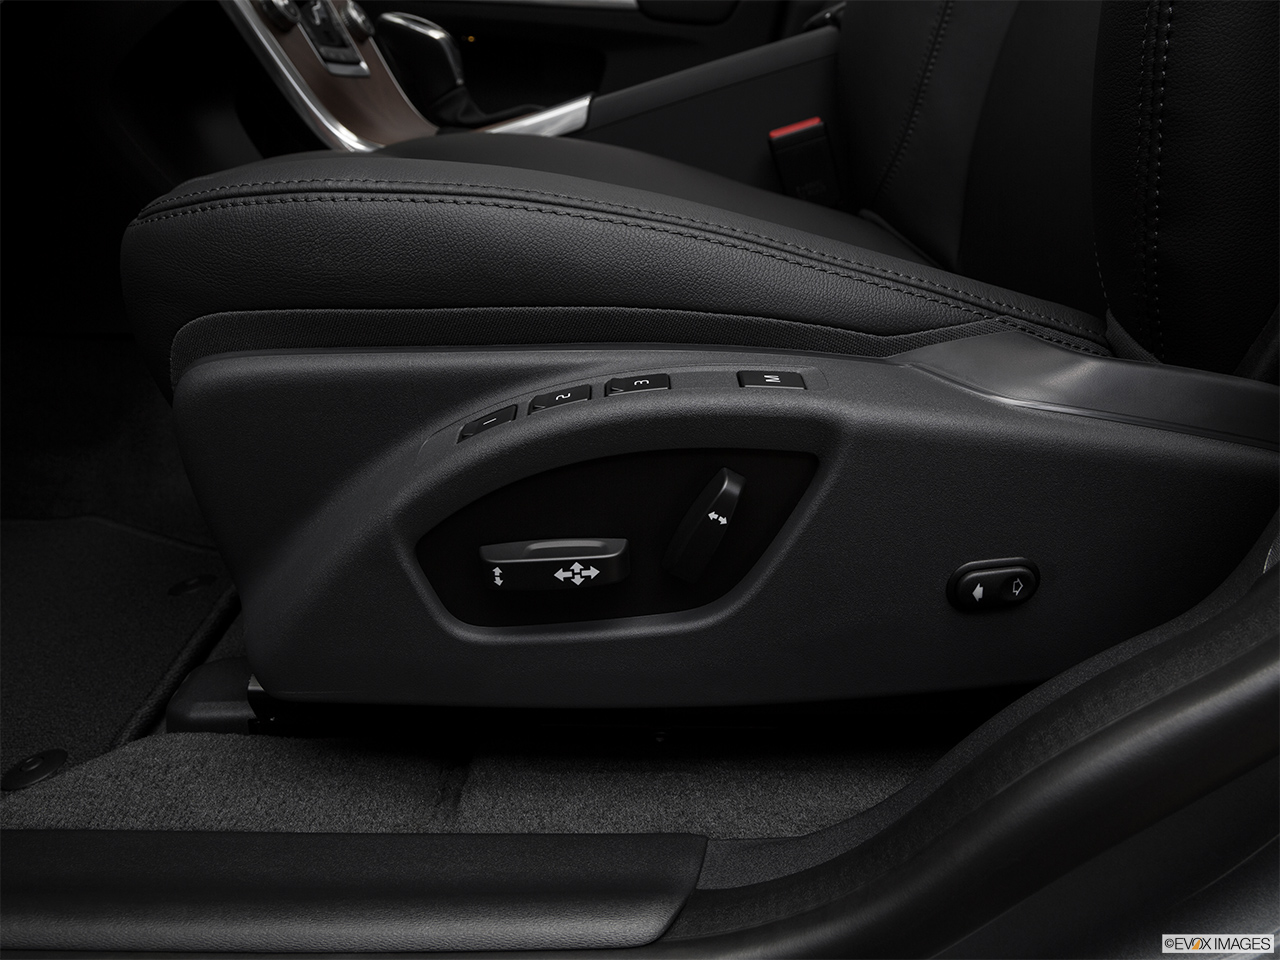 2017 Volvo XC60 T5 Inscription Seat Adjustment Controllers. 